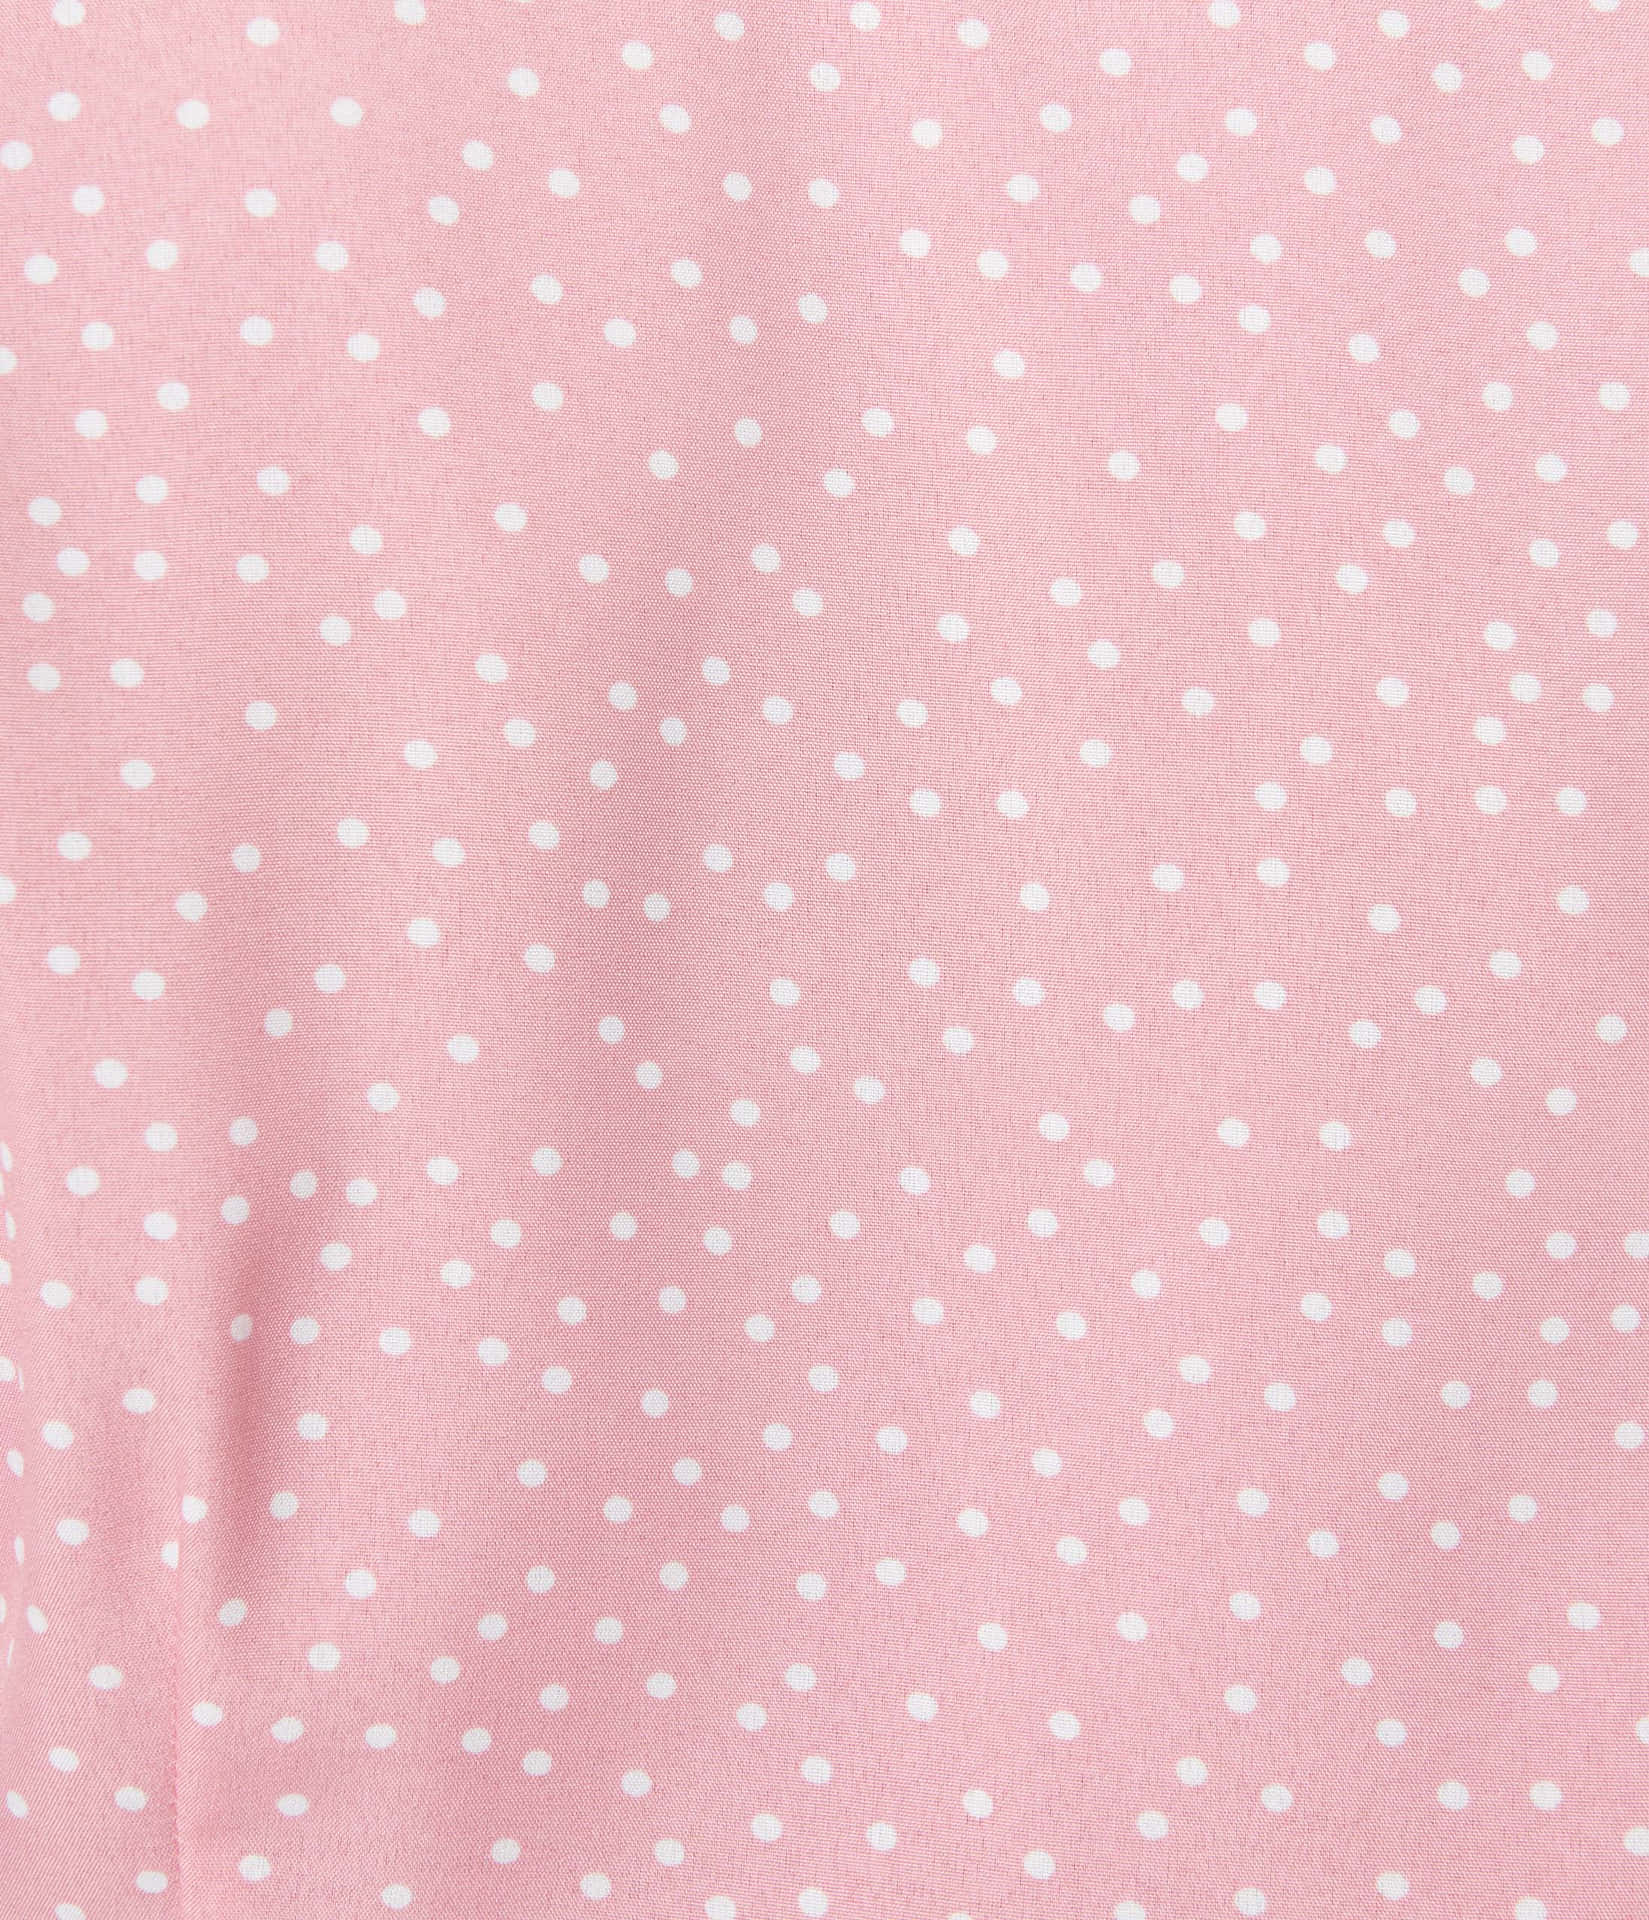 A Close Up Of A Pink Polka Dot Dress